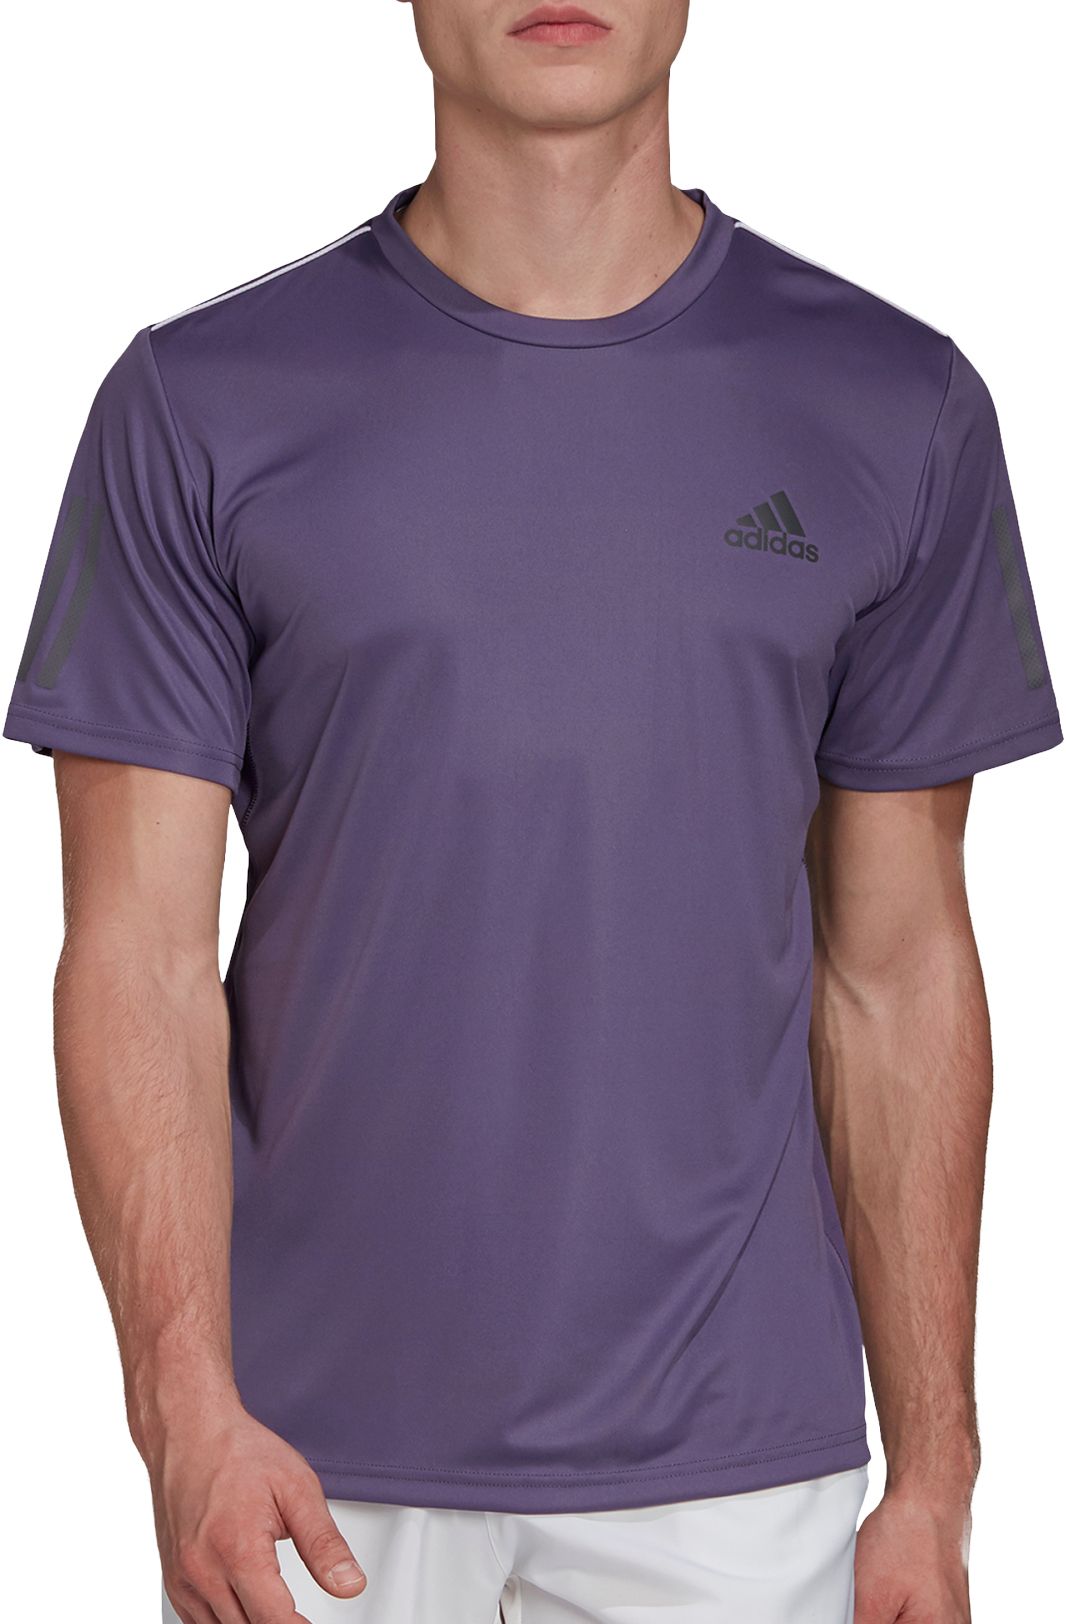 adidas Men's 3-Stripes Tennis T-Shirt - .97